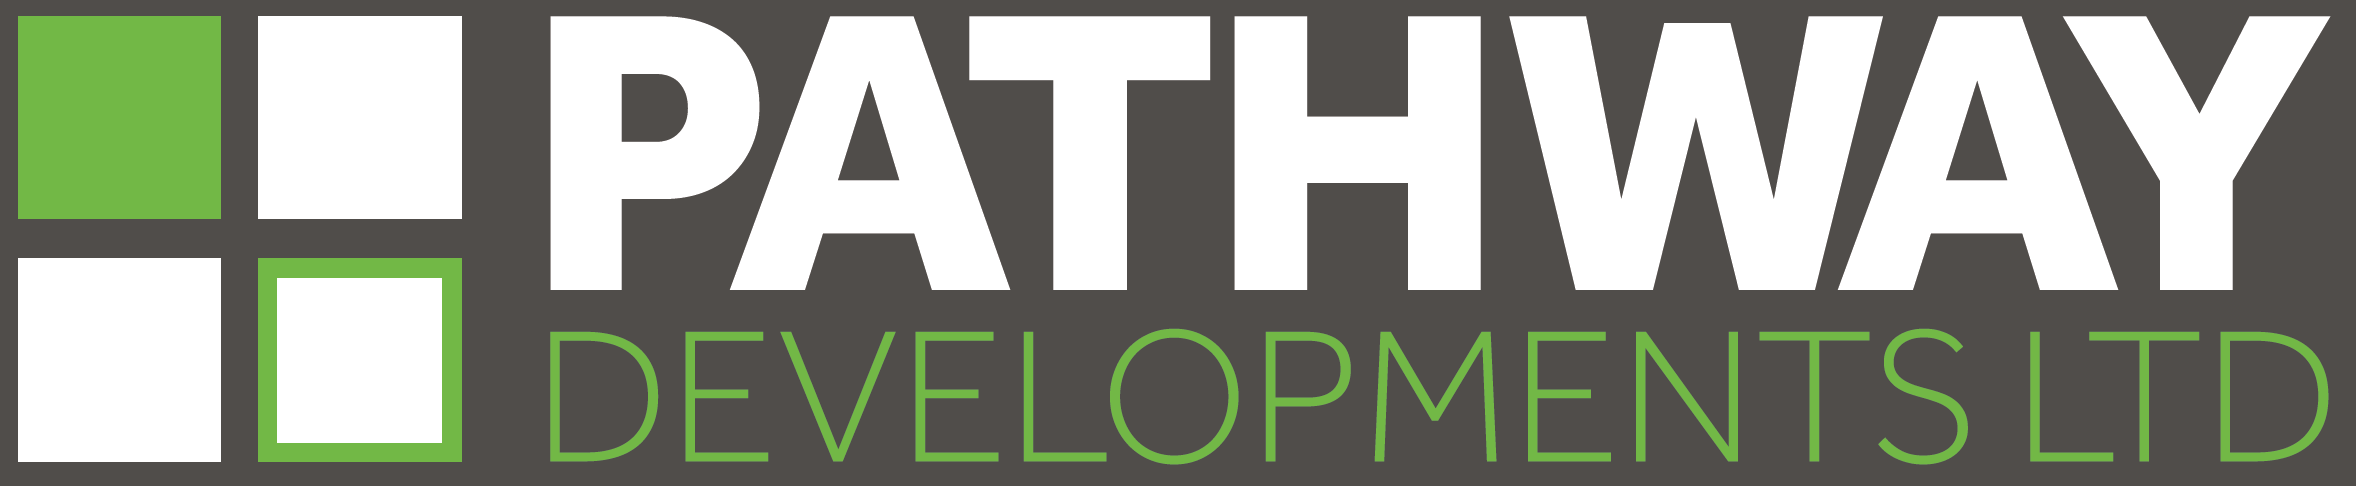 Pathway Developments Ltd